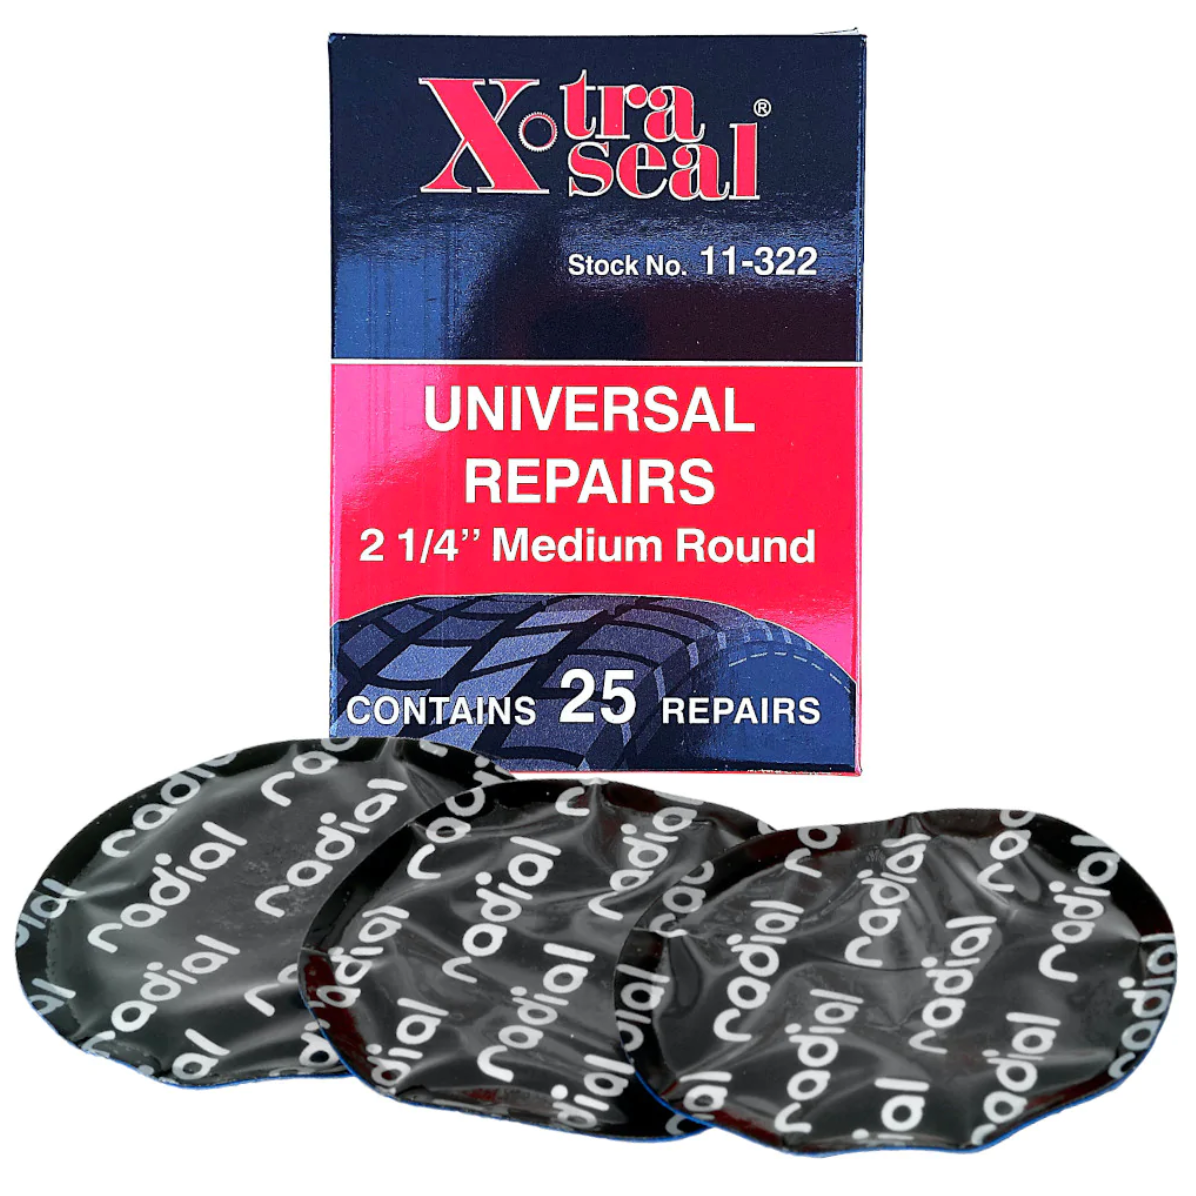 Xtra Seal 2 1/4" Medium Round Universal Tire Patches